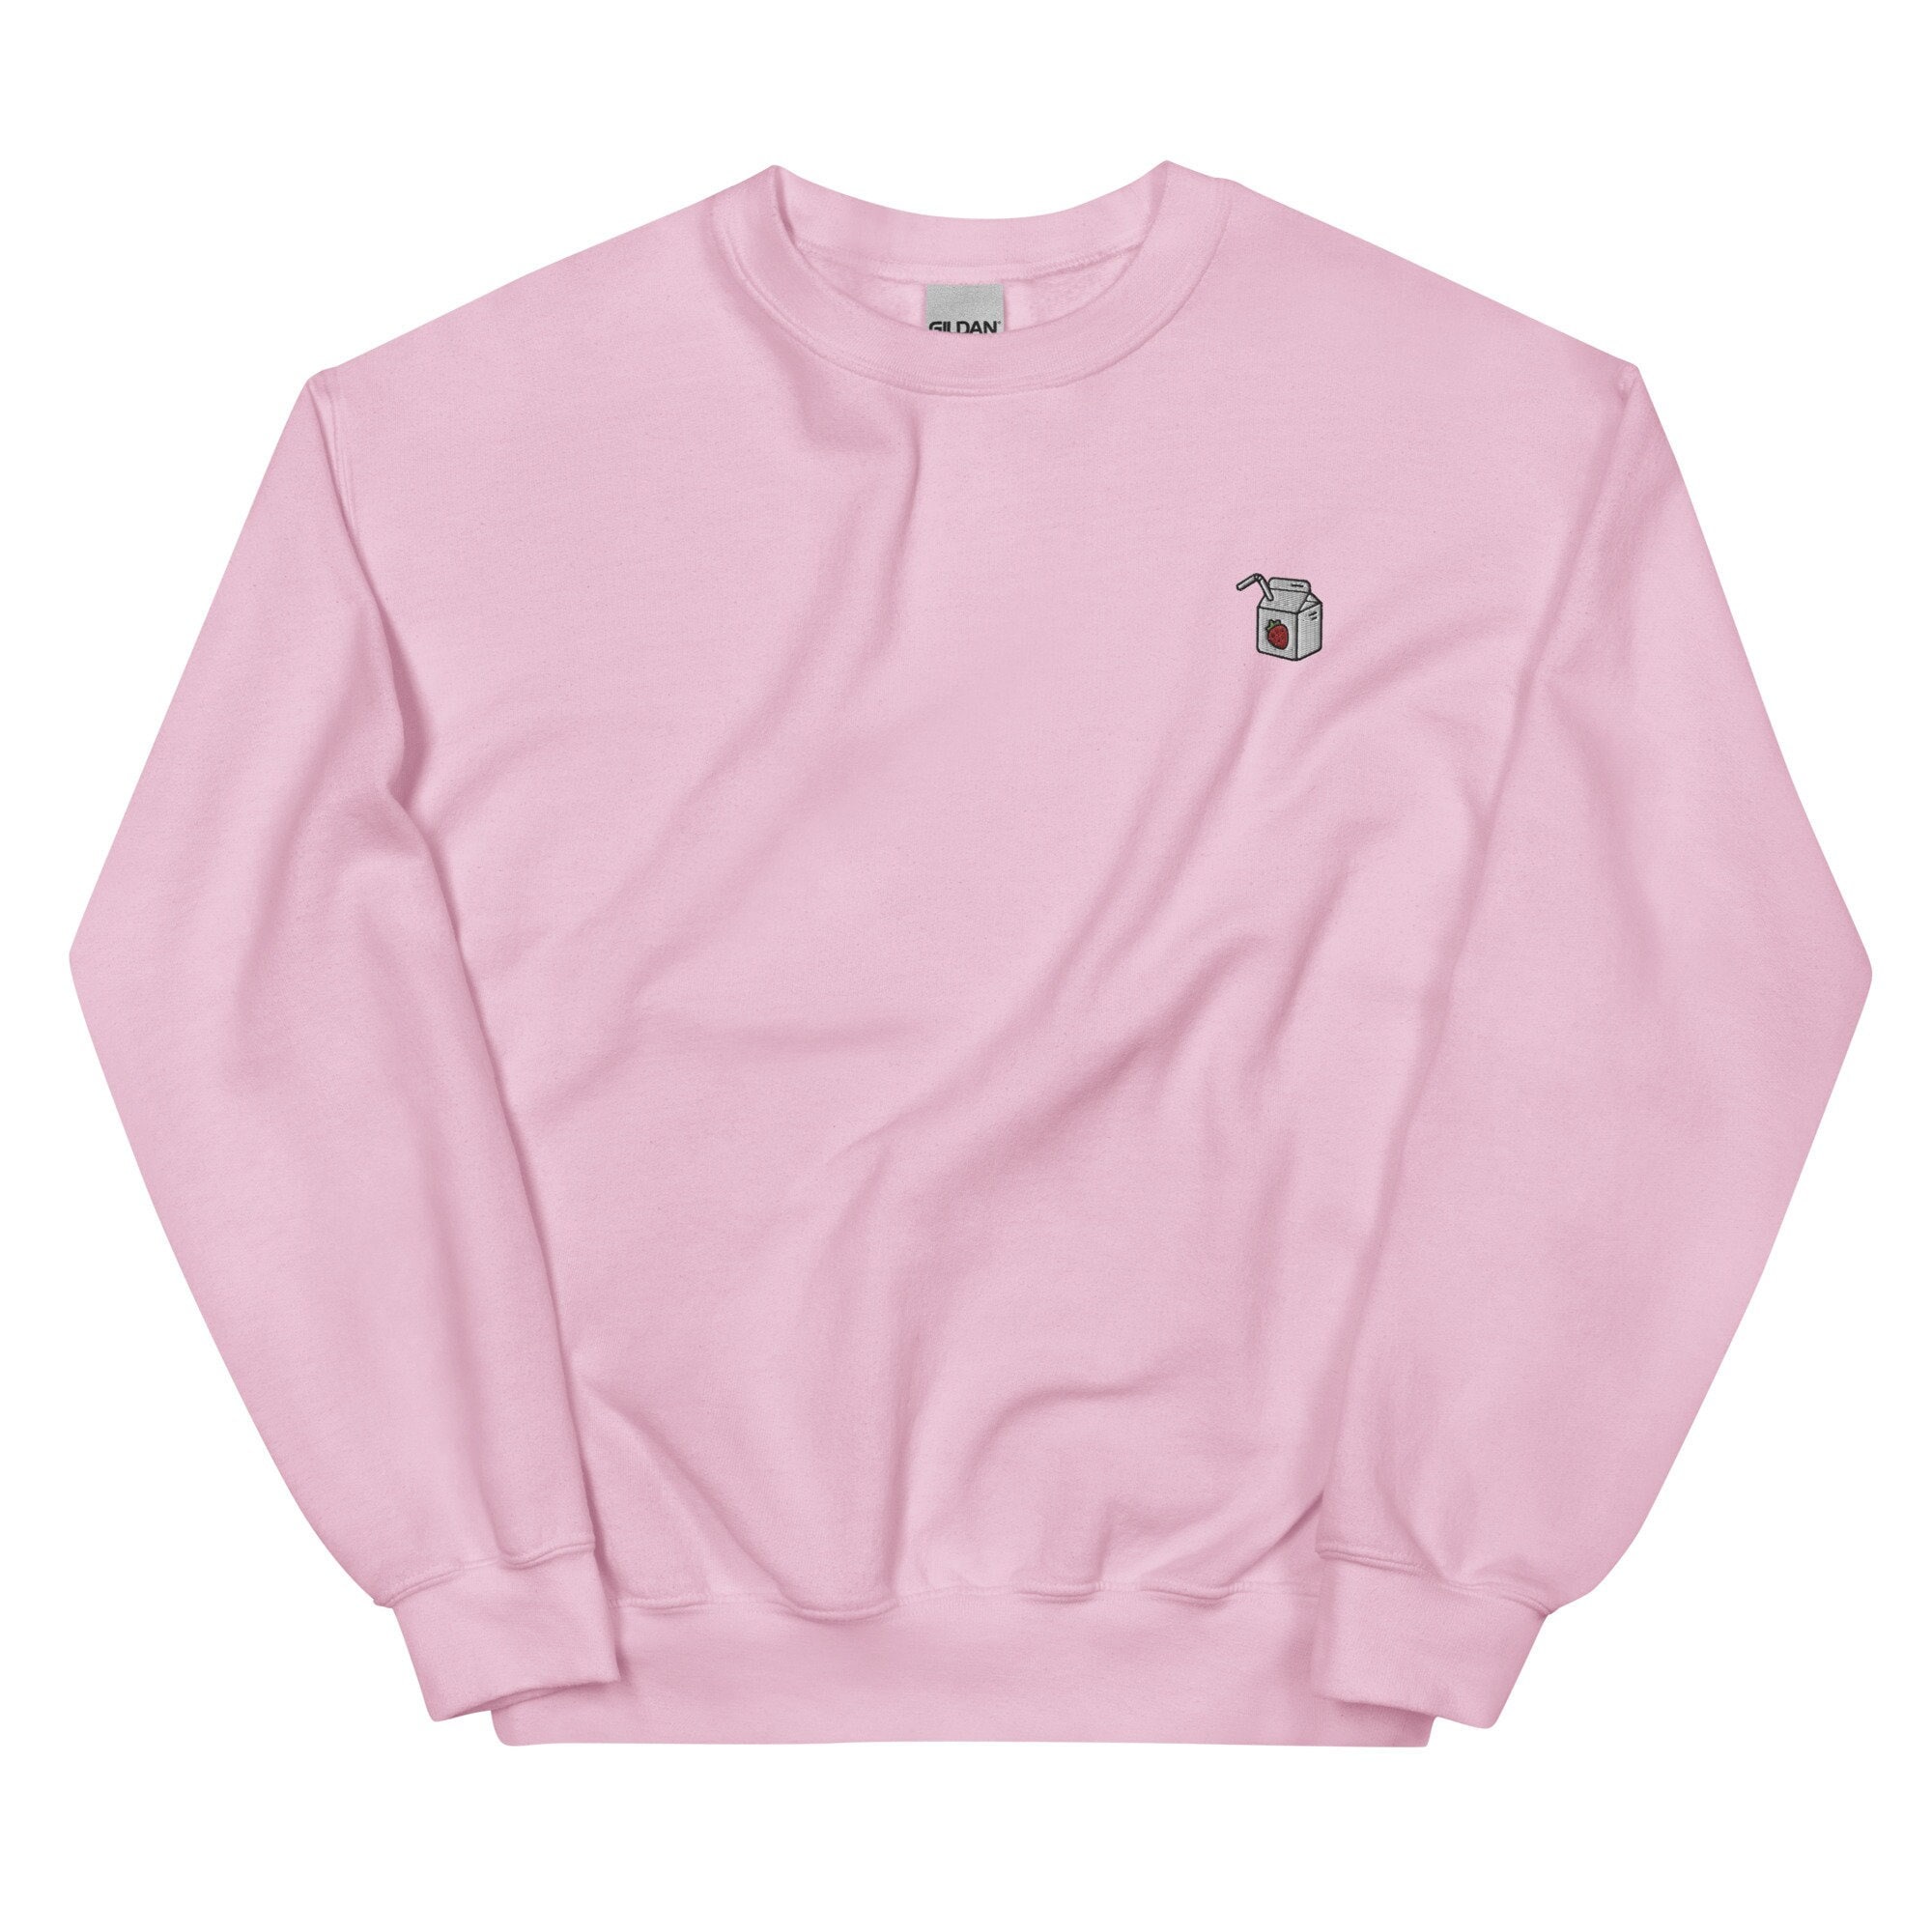 Strawberry Milk Sweatshirt 